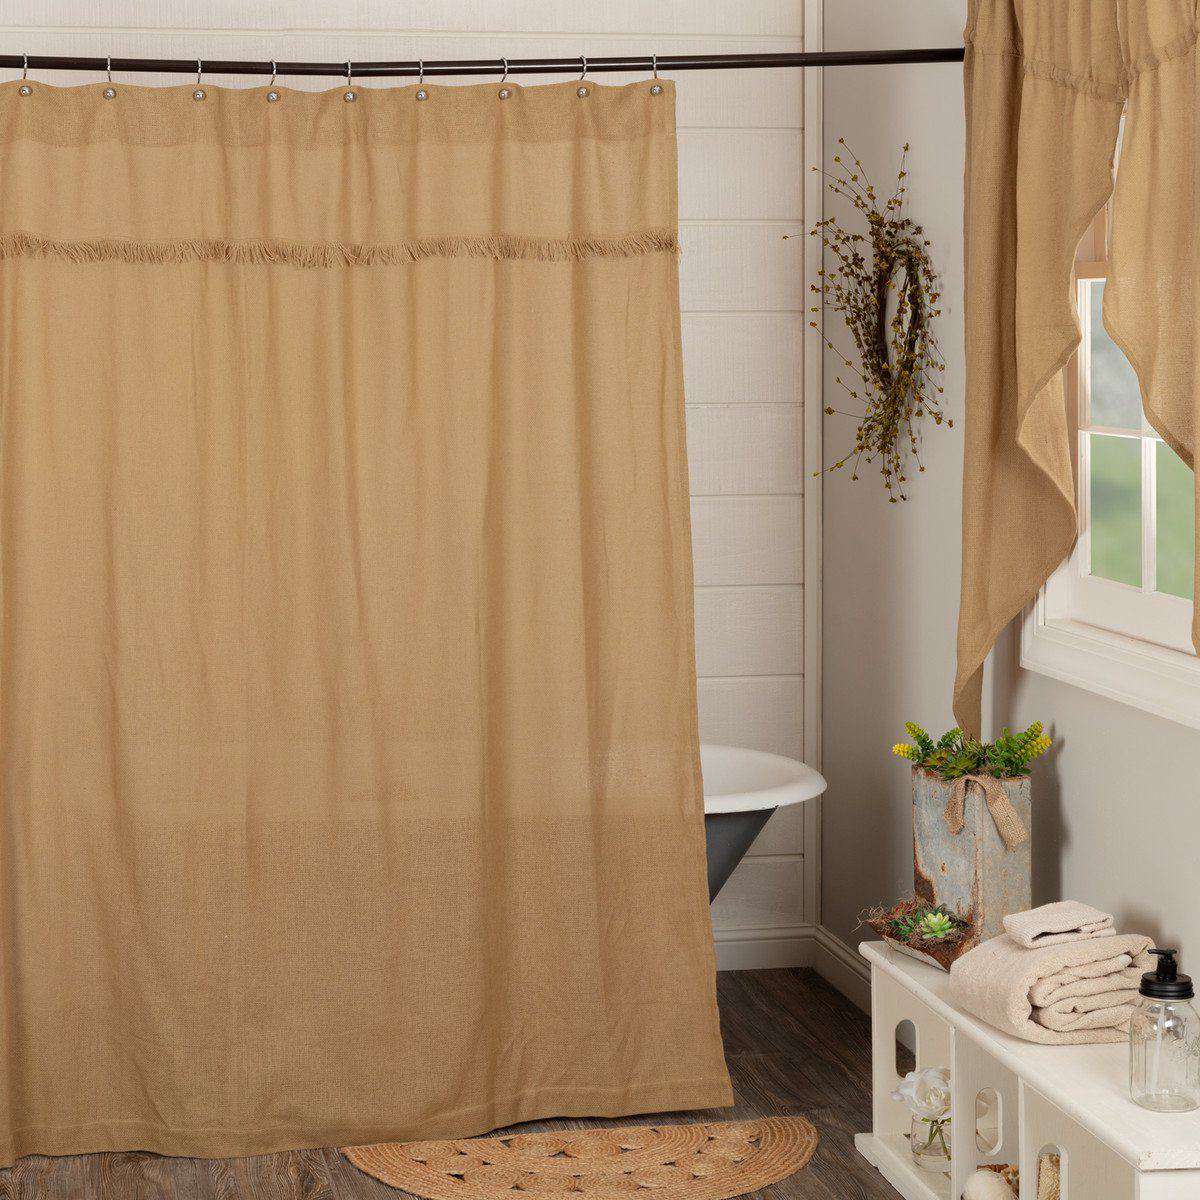 Burlap Vintage/Antique/Natural Shower Curtain 72"x72" curtain VHC Brands Natural 